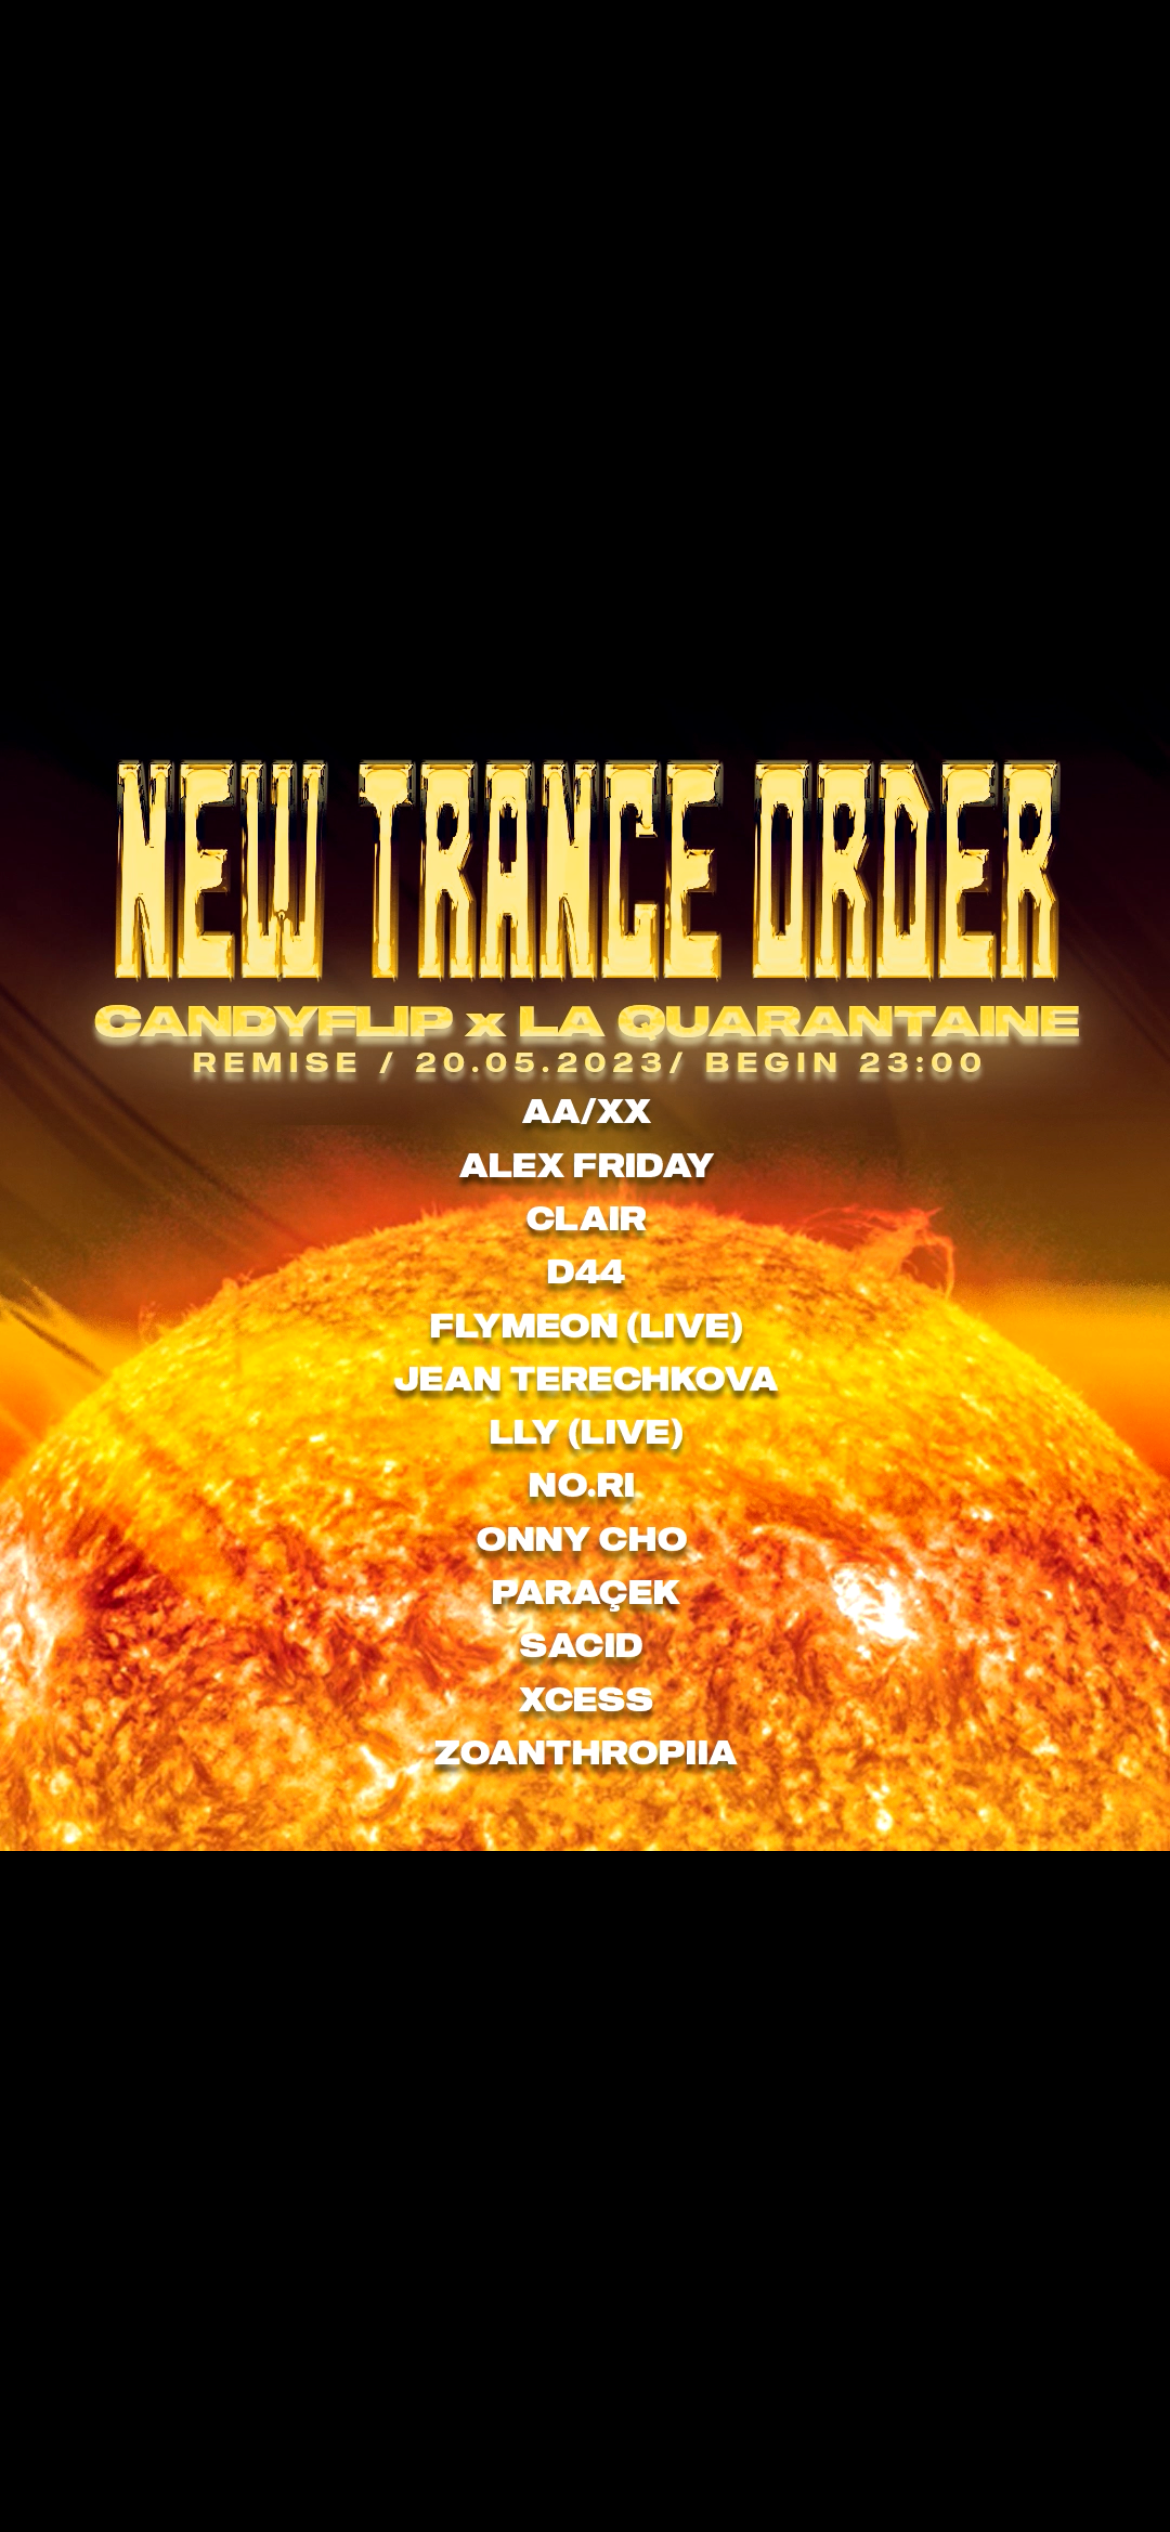 Candyflip x La Quarantaine: New Trance Order - フライヤー表